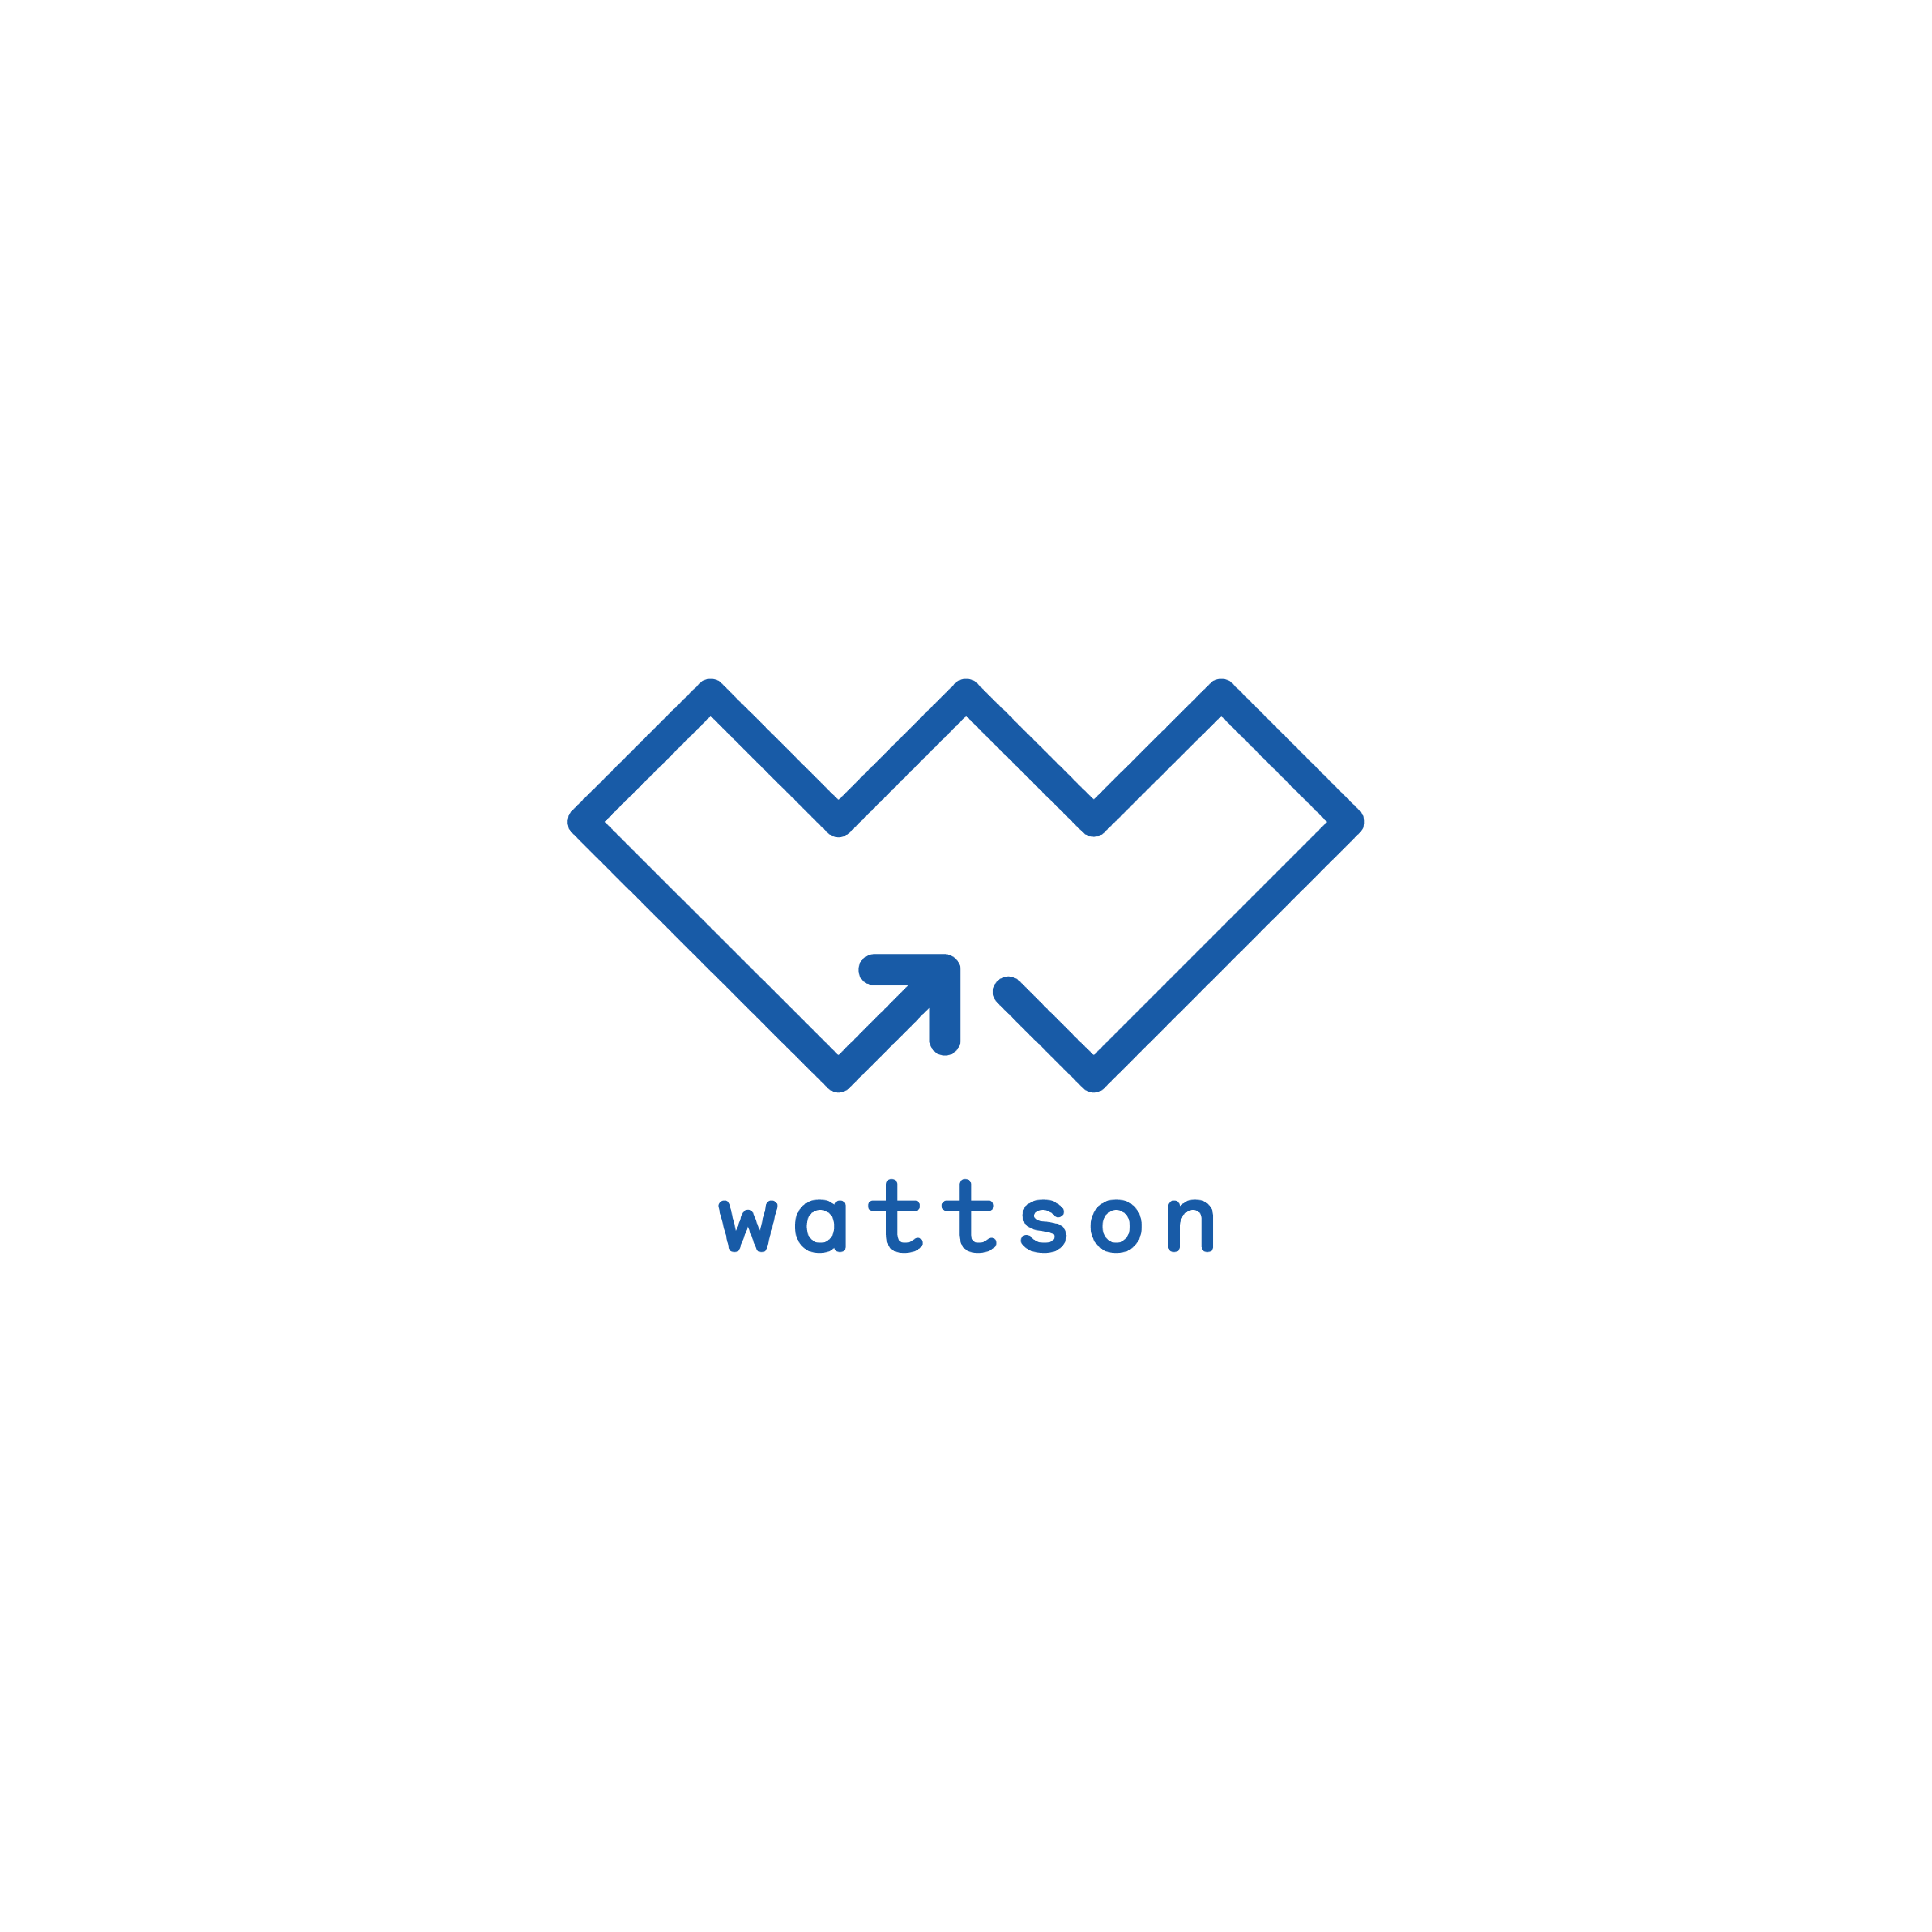 LOGO'S_Wattson logo